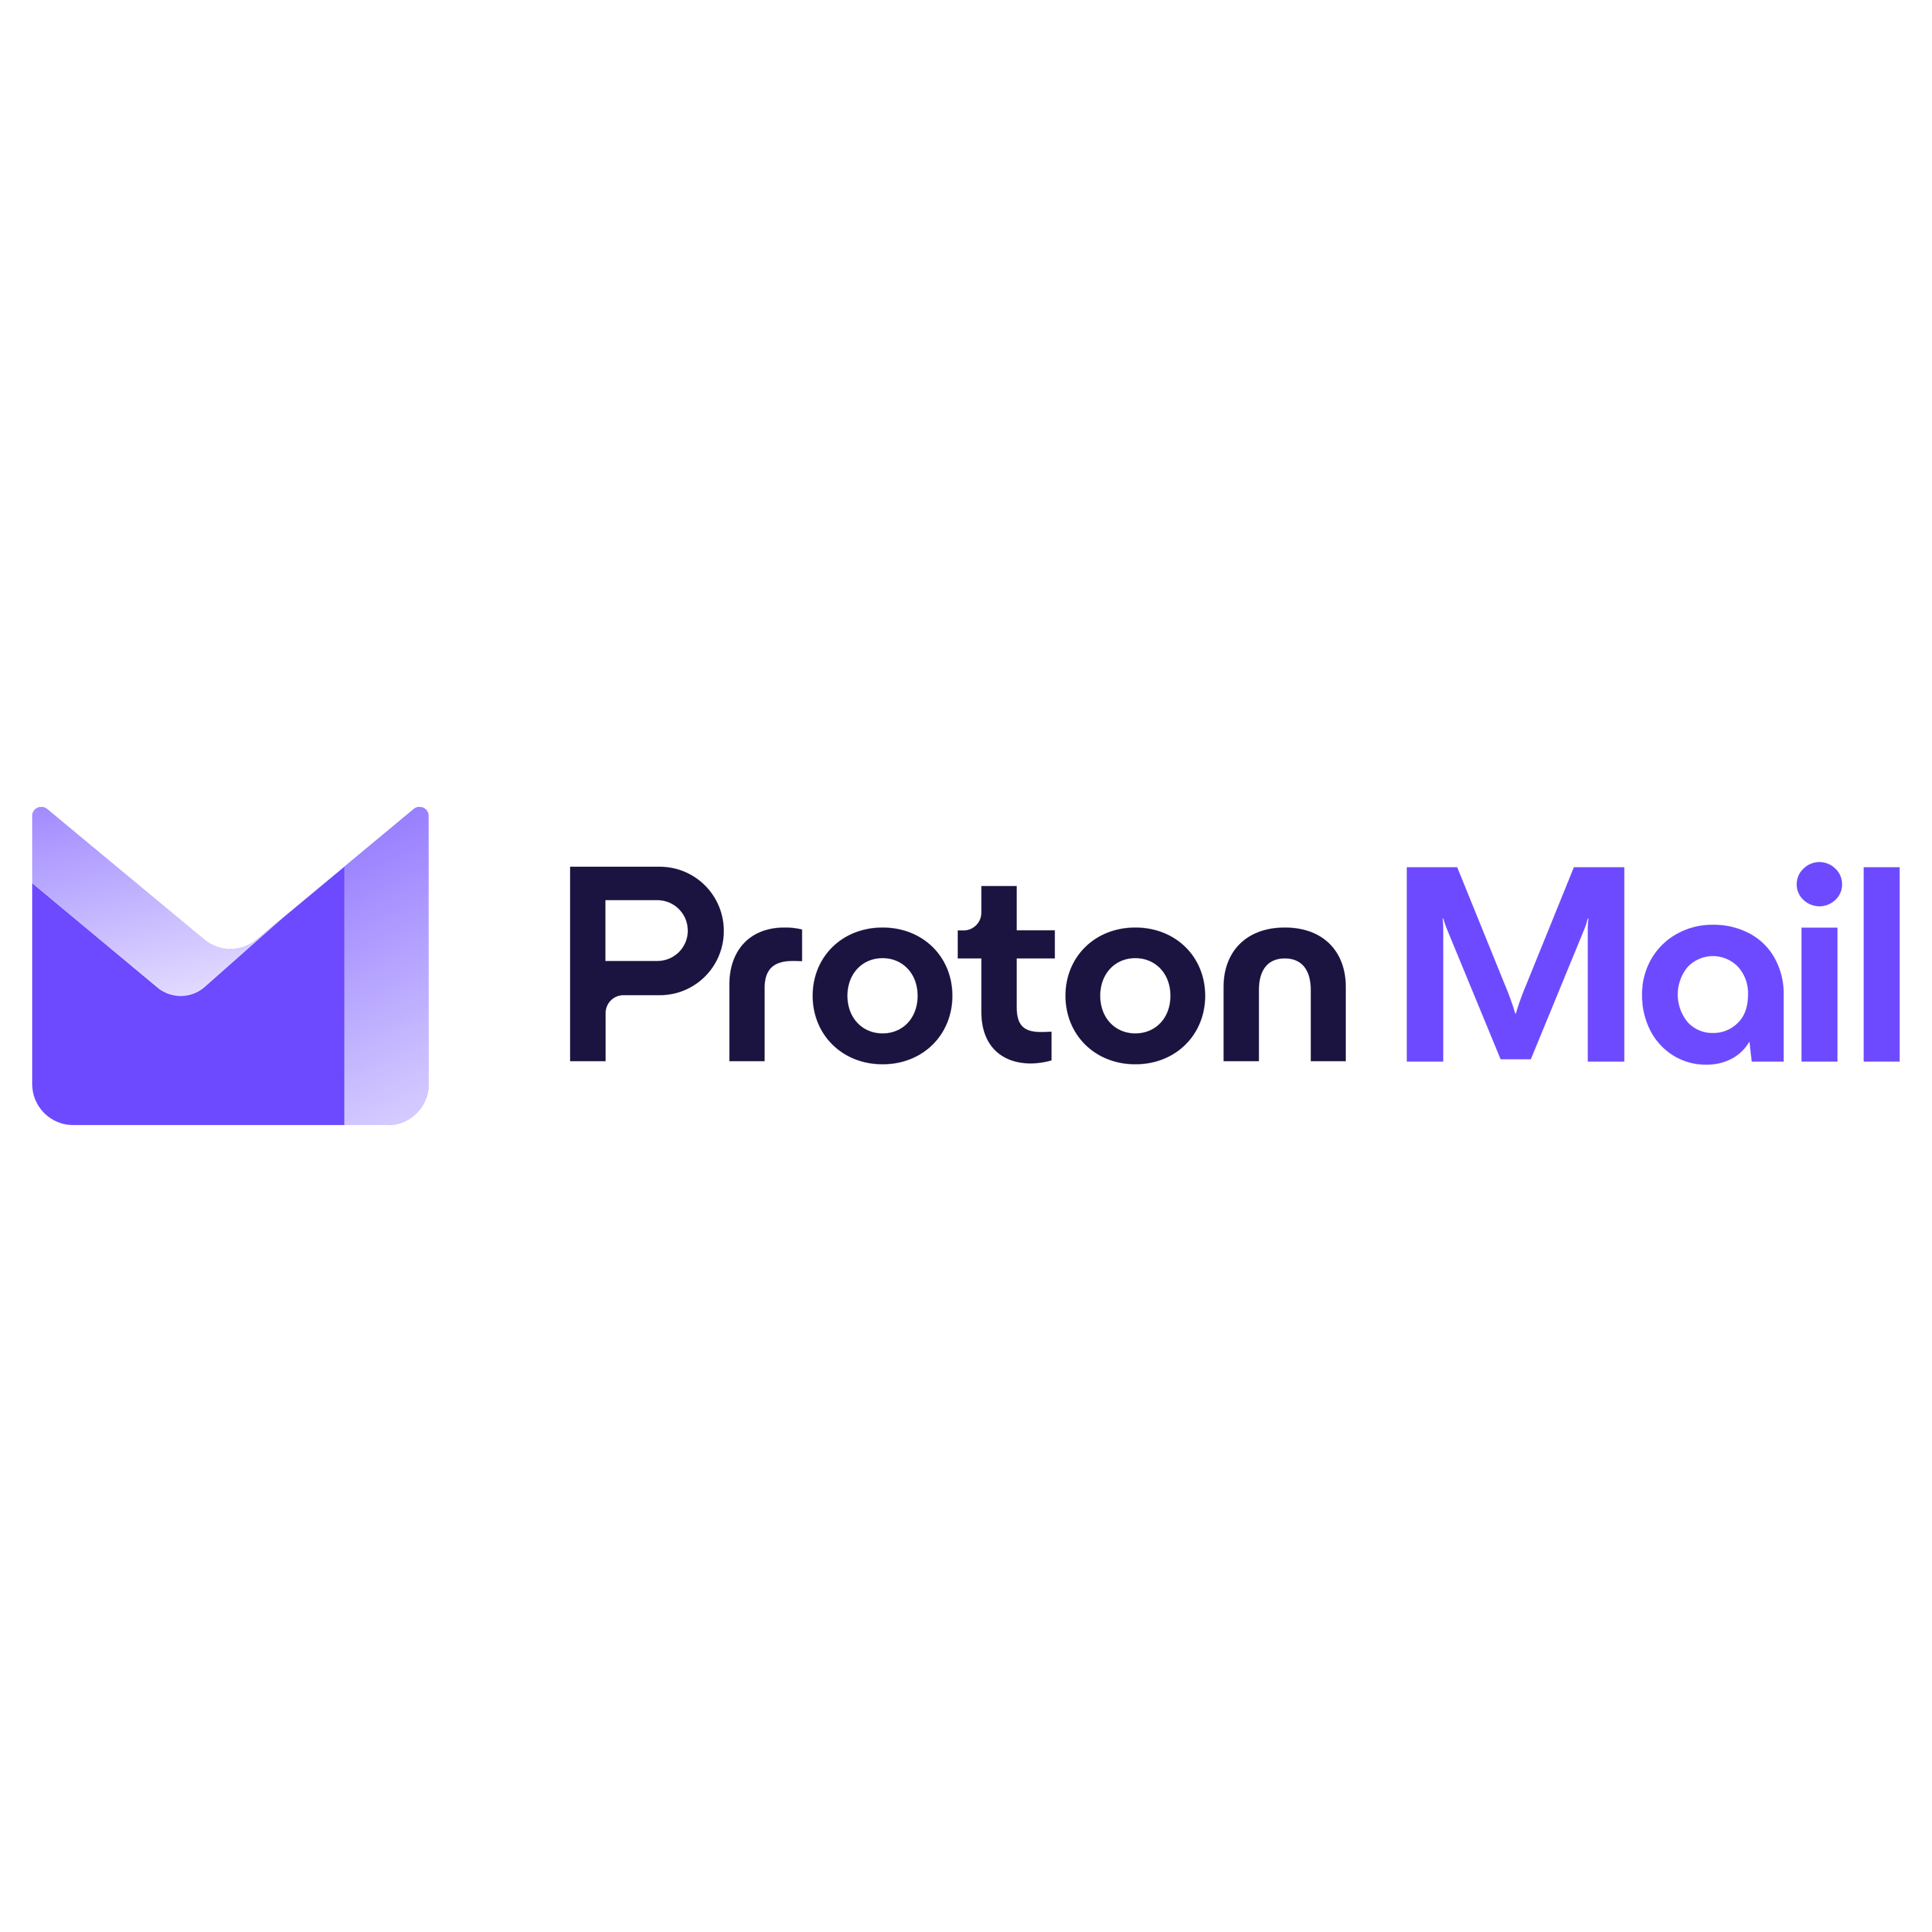 Protonmail Logo Transparent Image